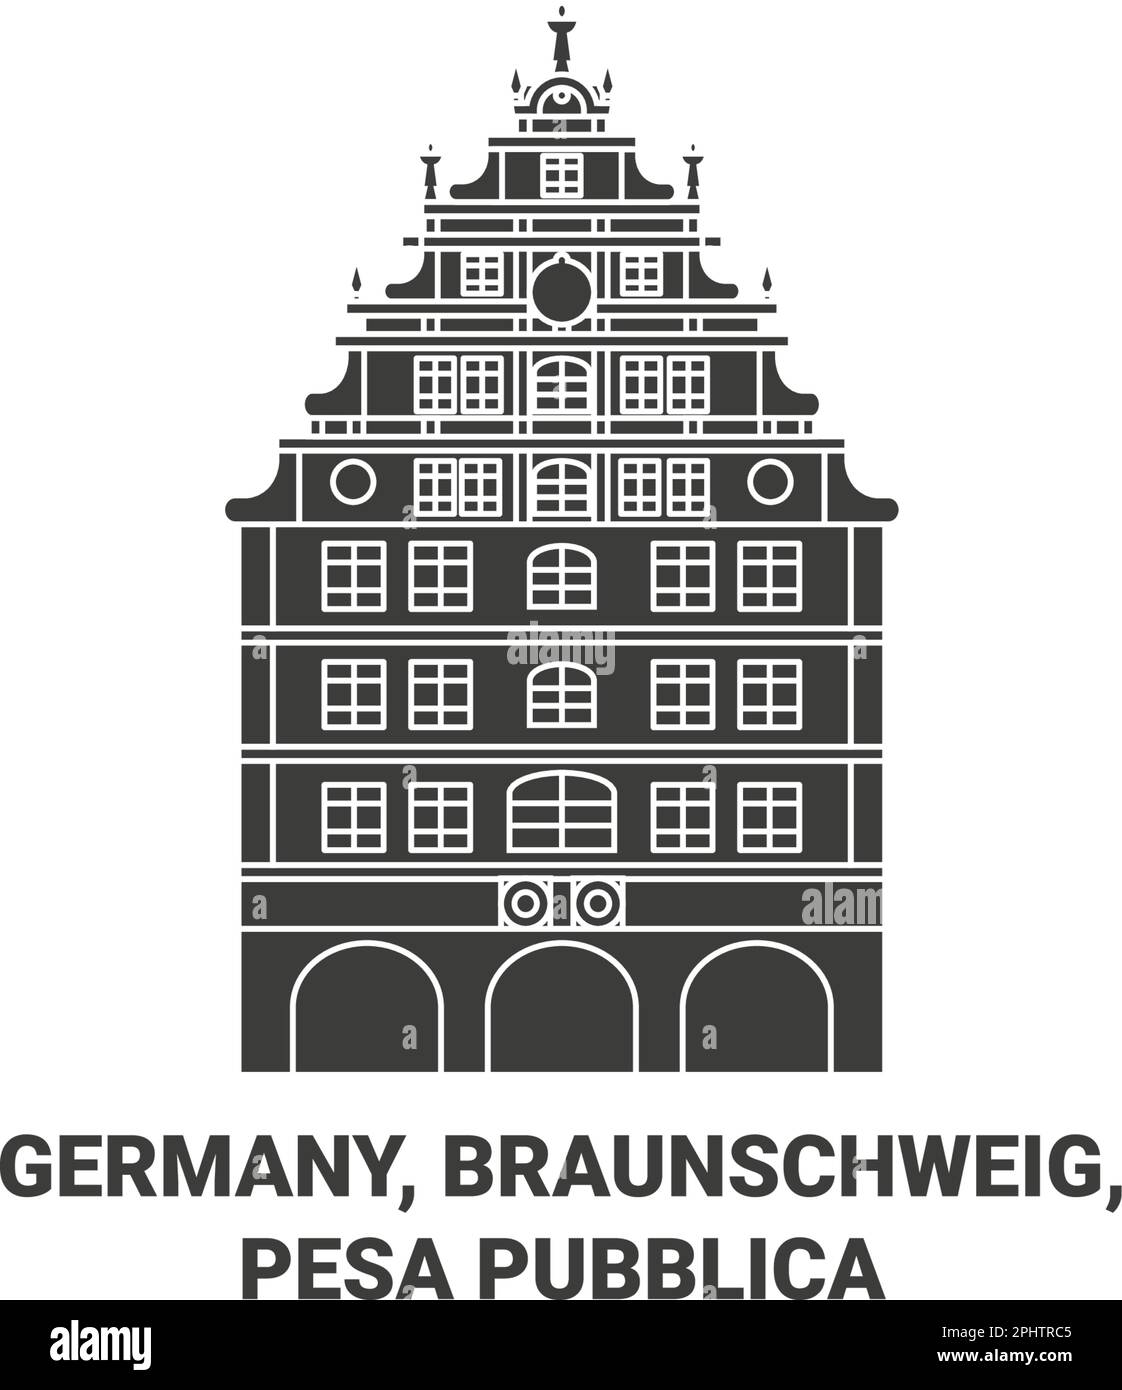 Germany, Braunschweig, Pesa Pubblica travel landmark vector illustration Stock Vector